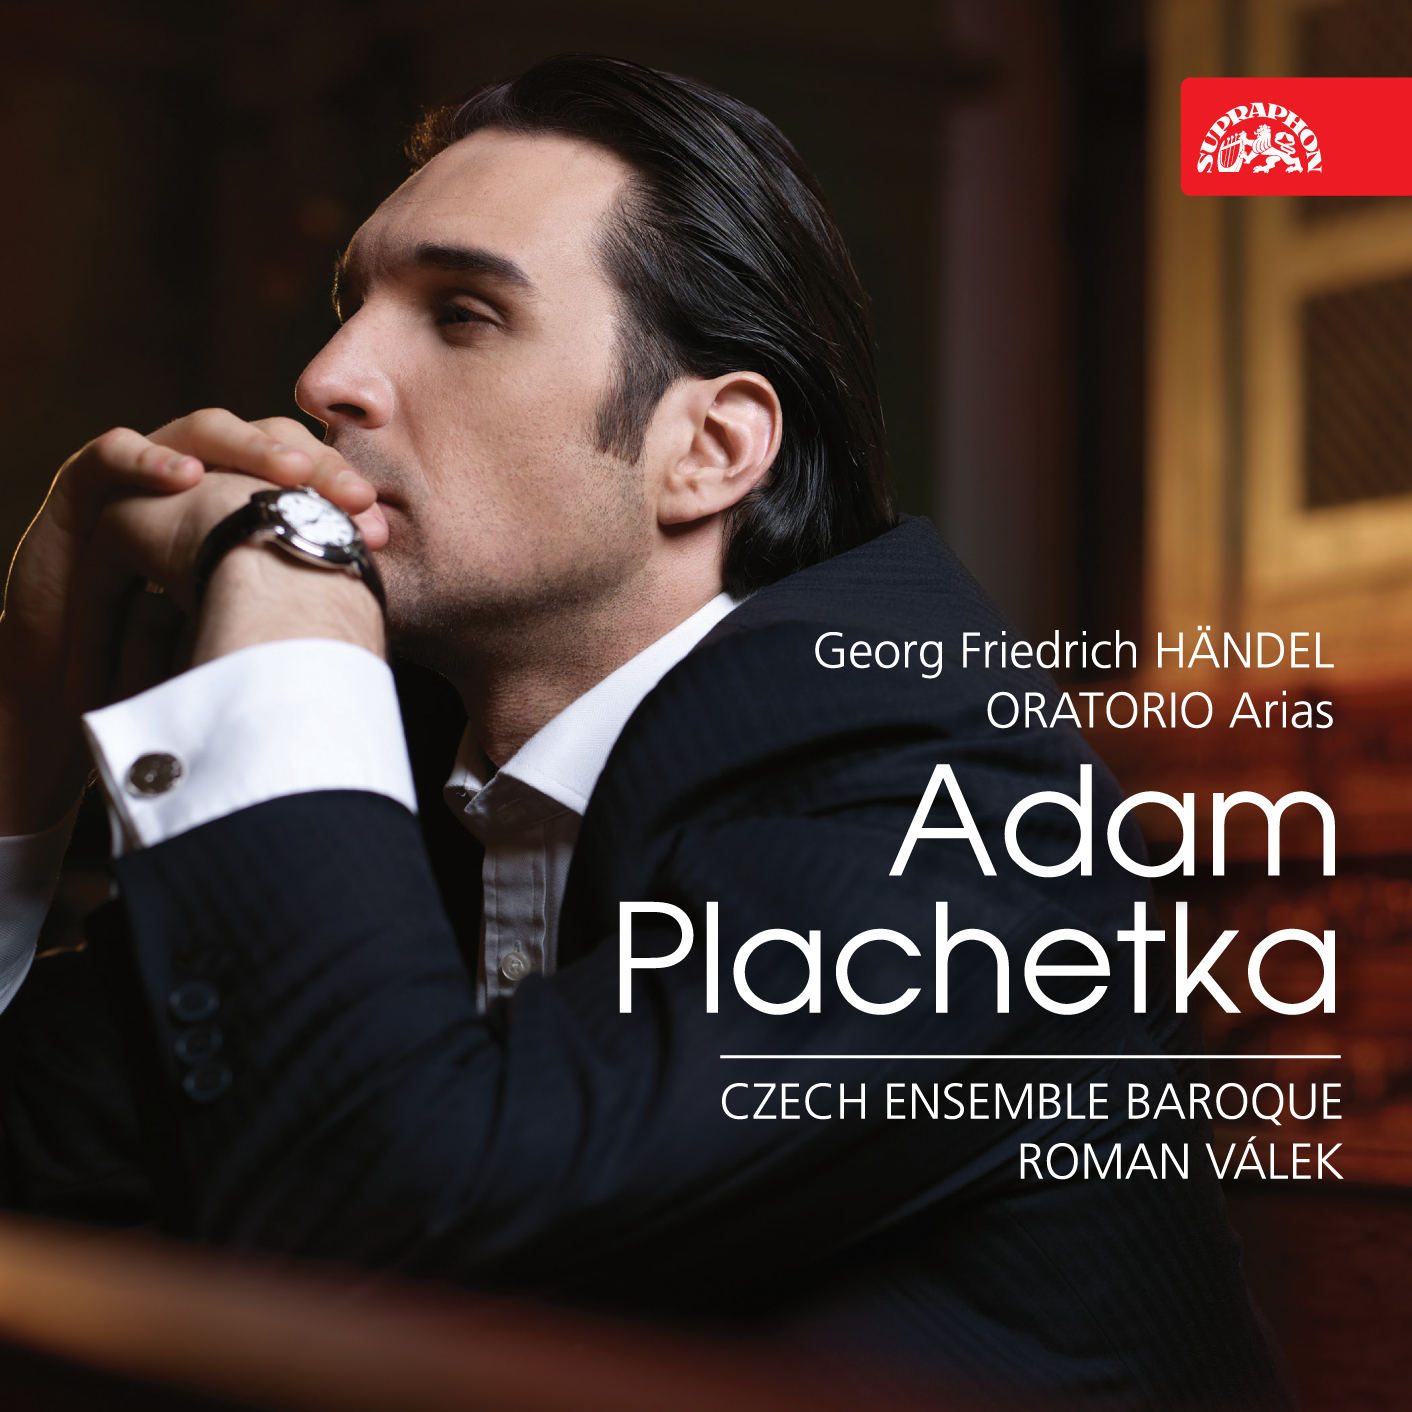 Adam Plachetka: Handel Oratorio Arias